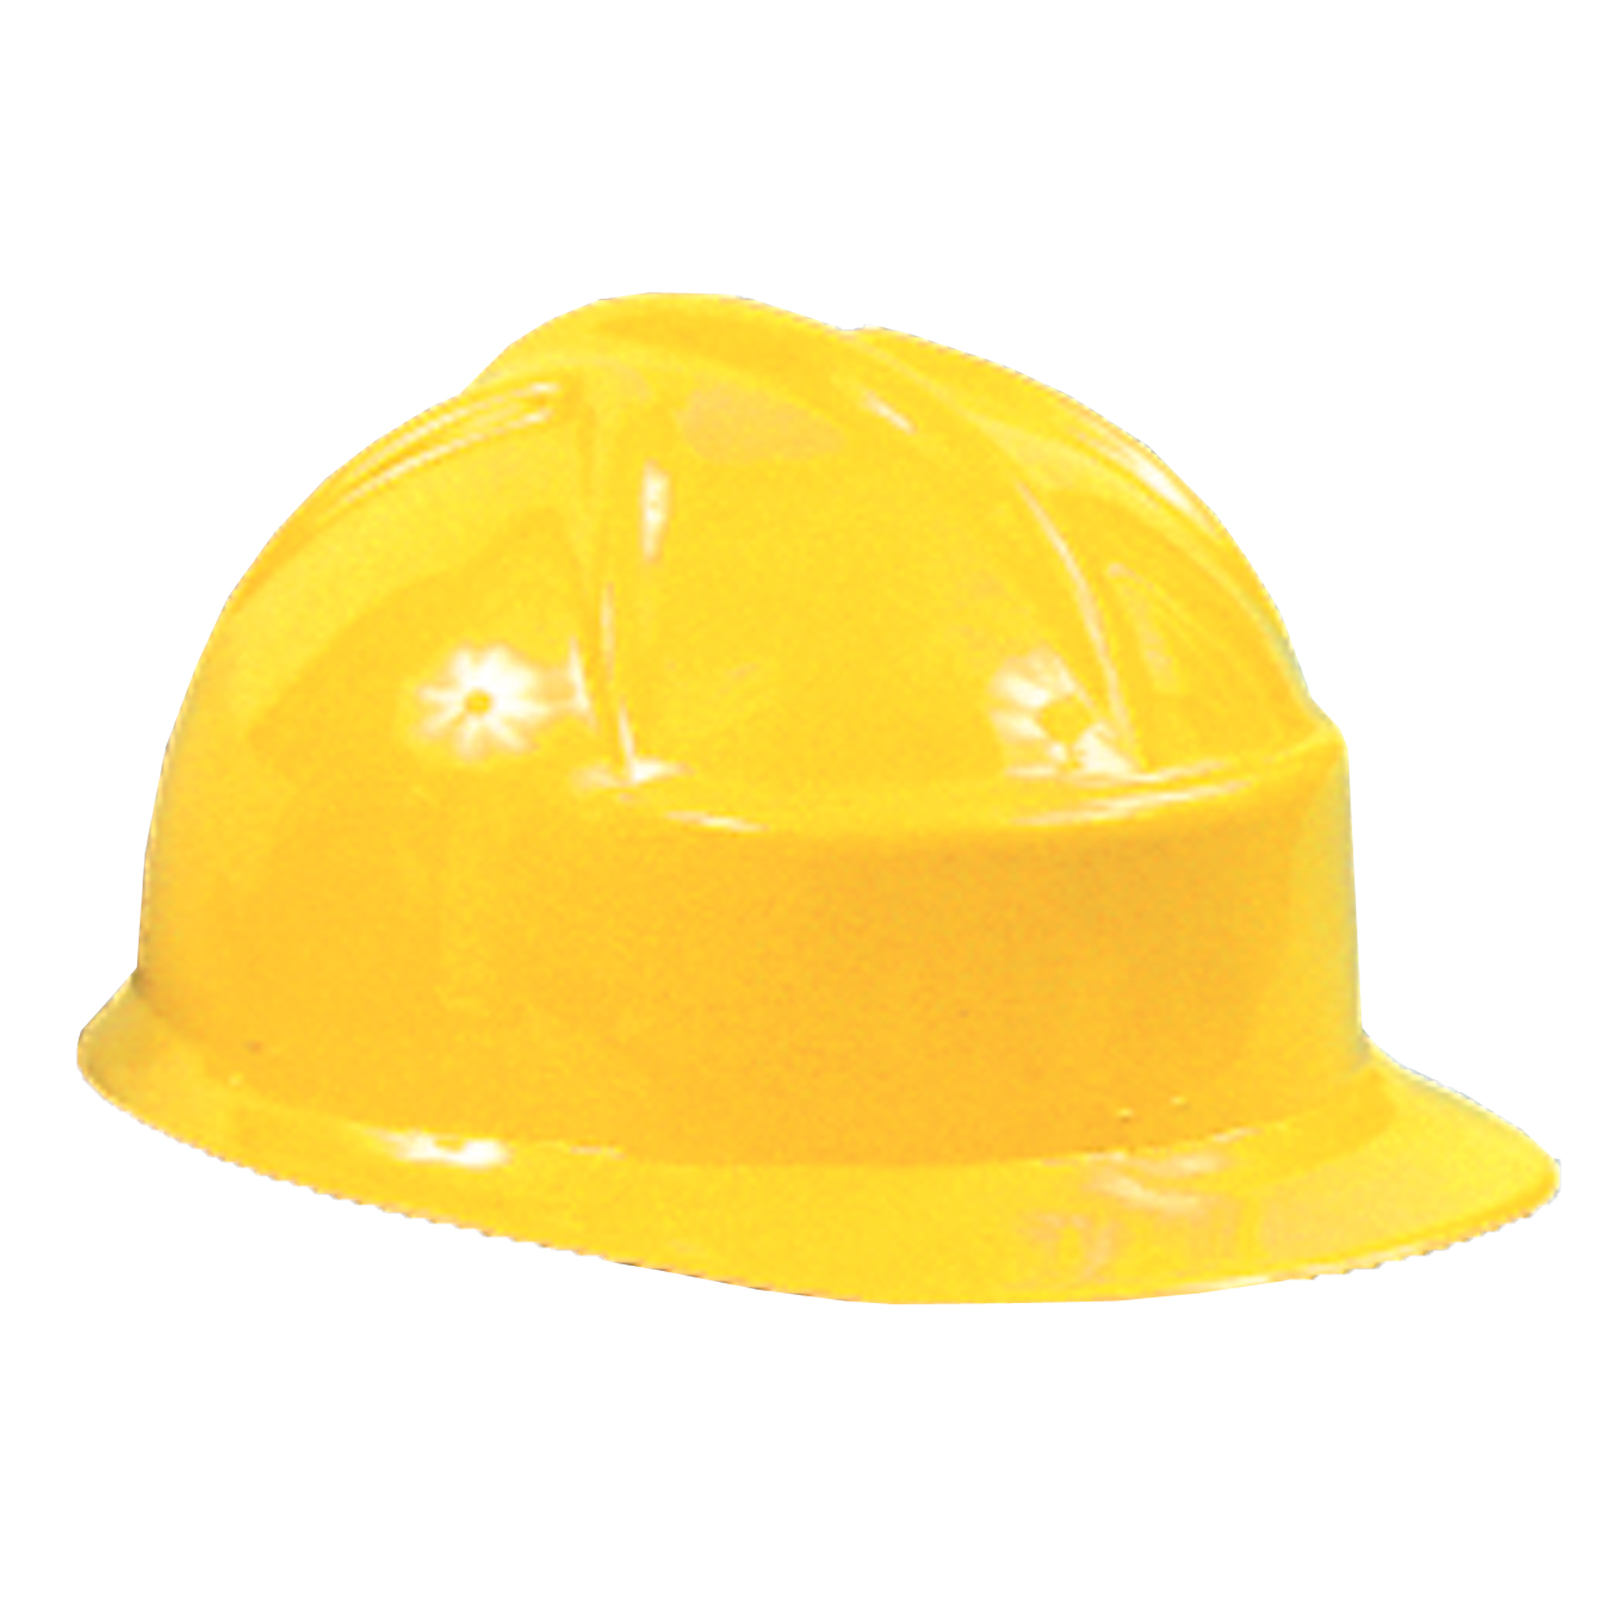 Construction Helmet Yellow Costume Accessory